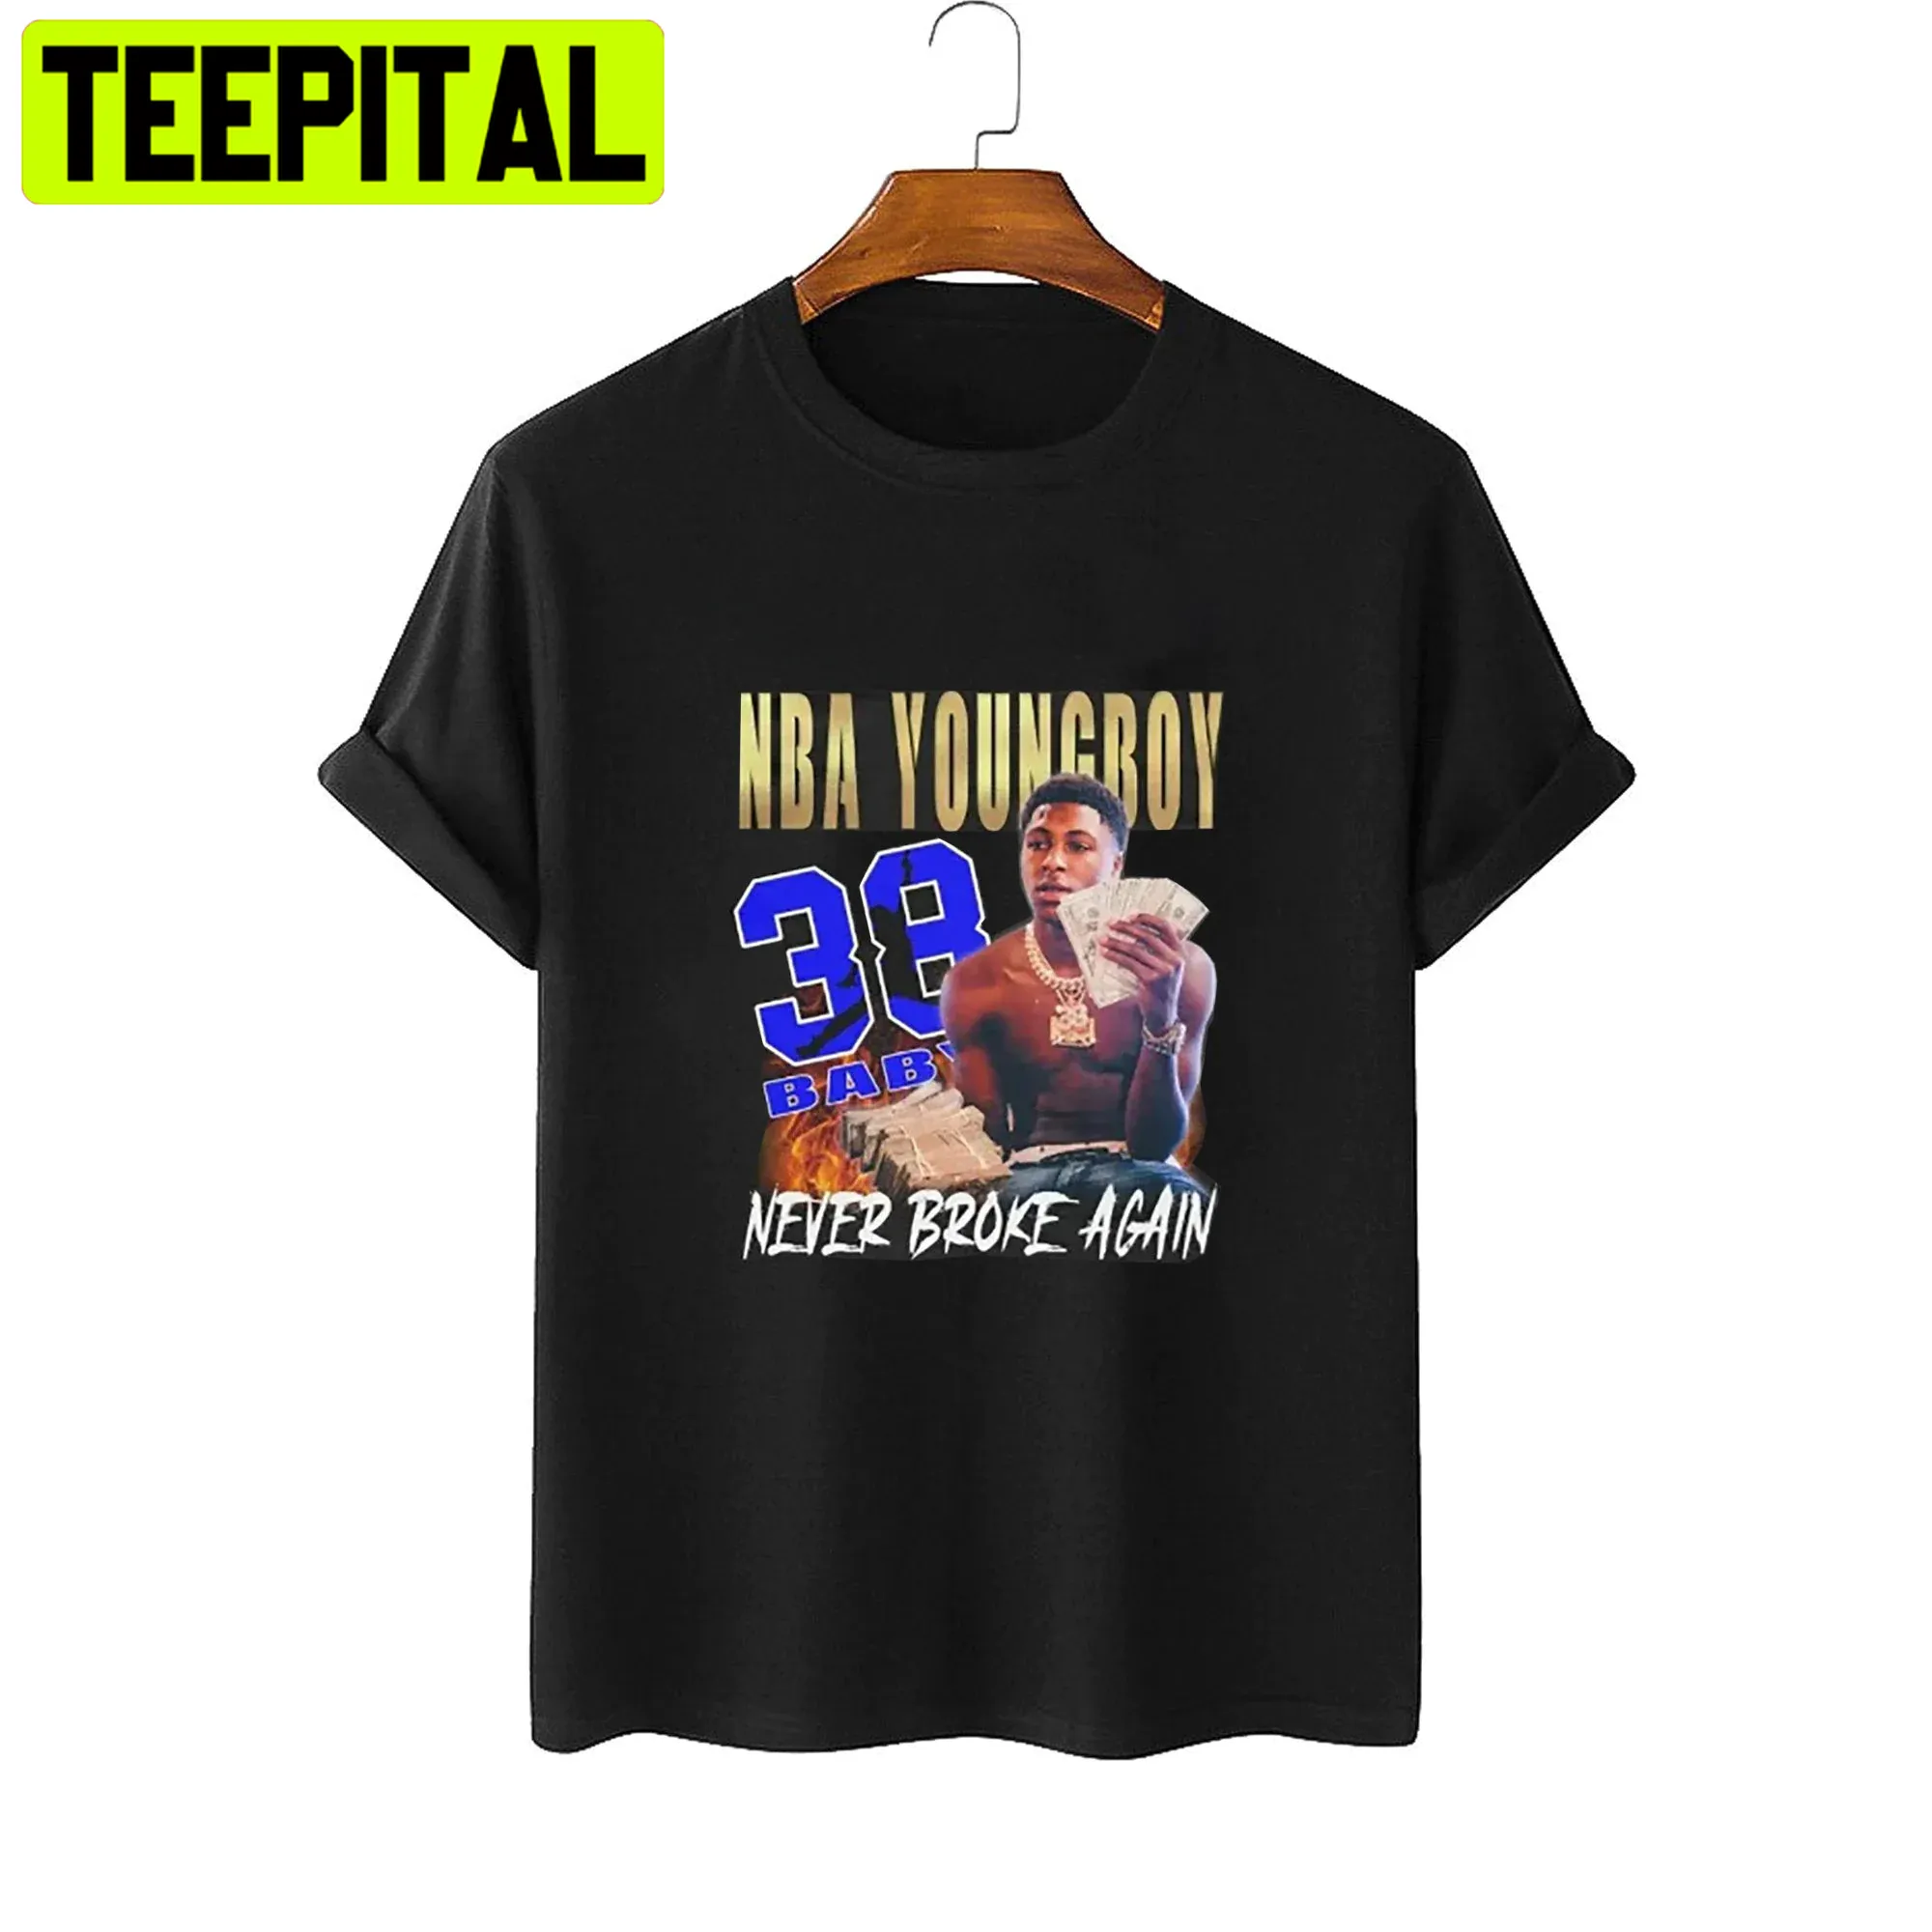 YoungBoy - NBA YoungBoy - Black Shirt - L - Gildan